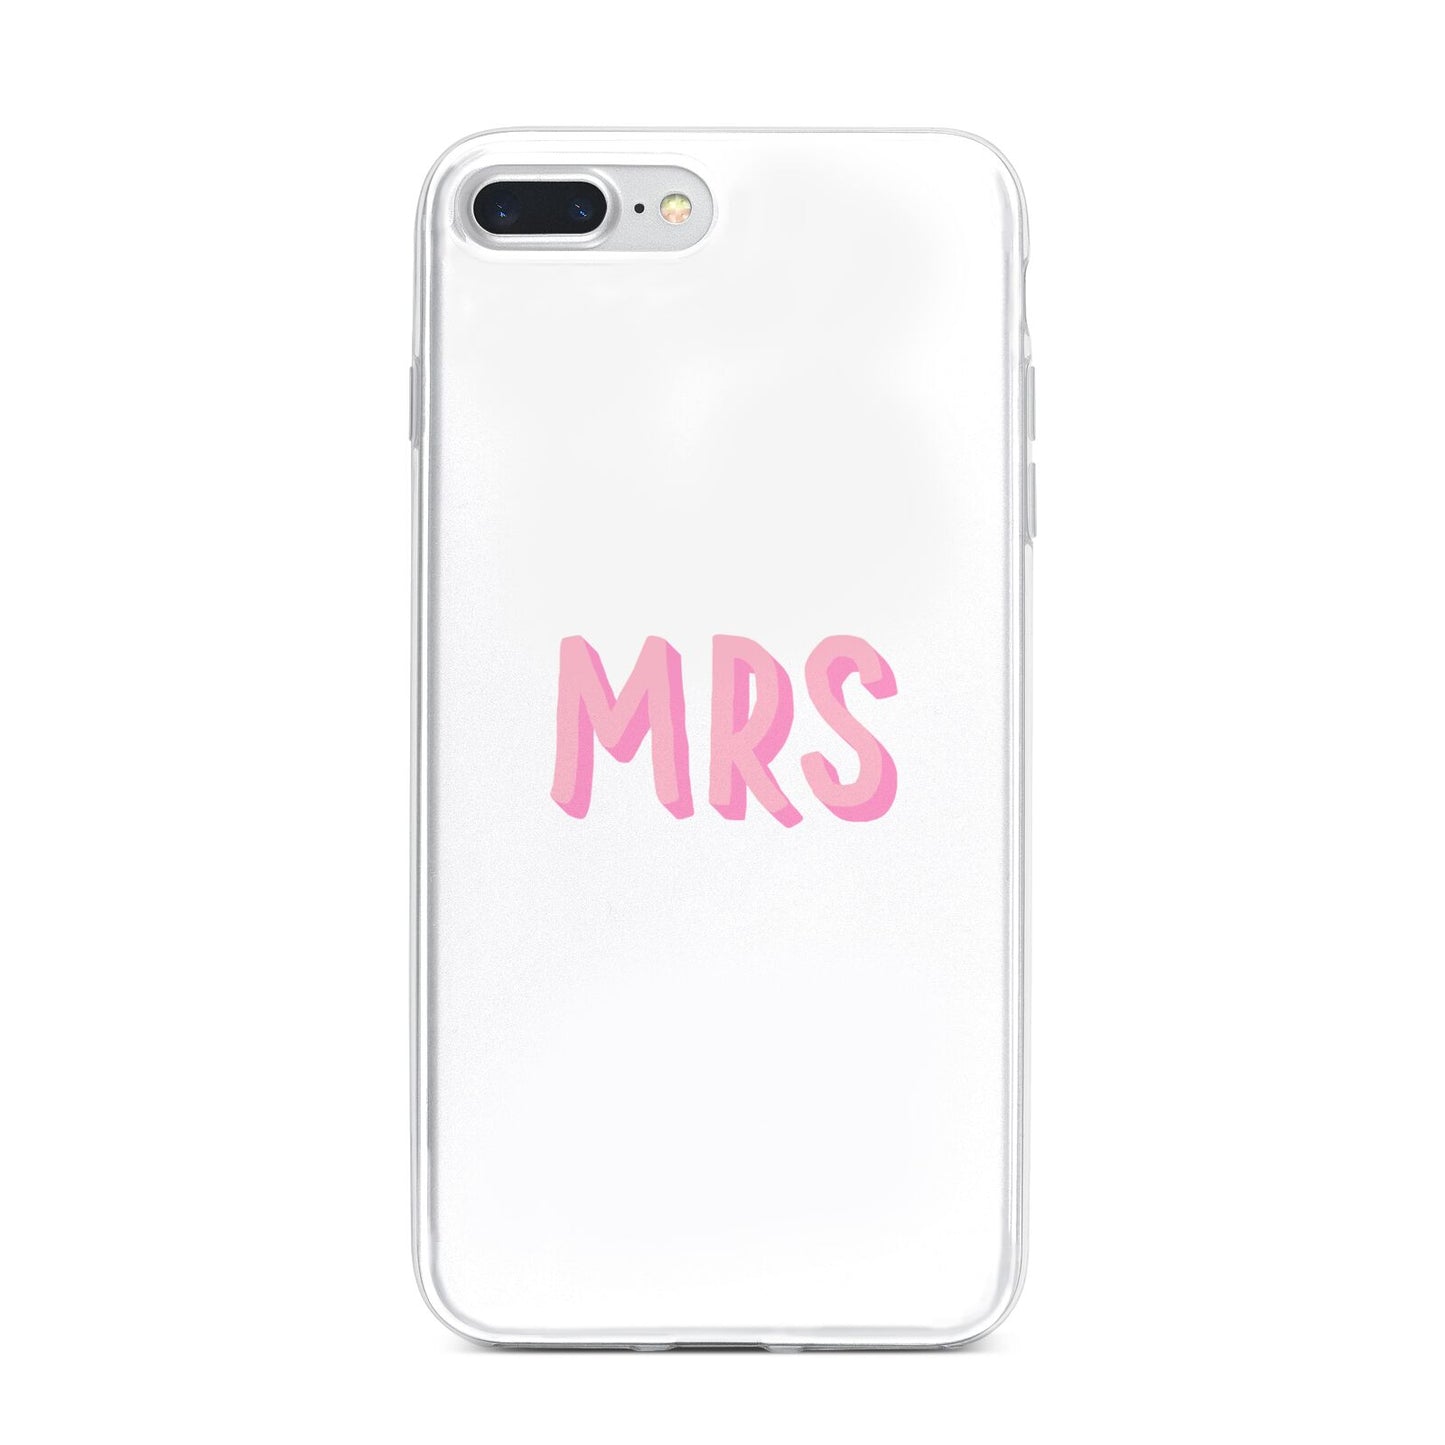 Mrs iPhone 7 Plus Bumper Case on Silver iPhone